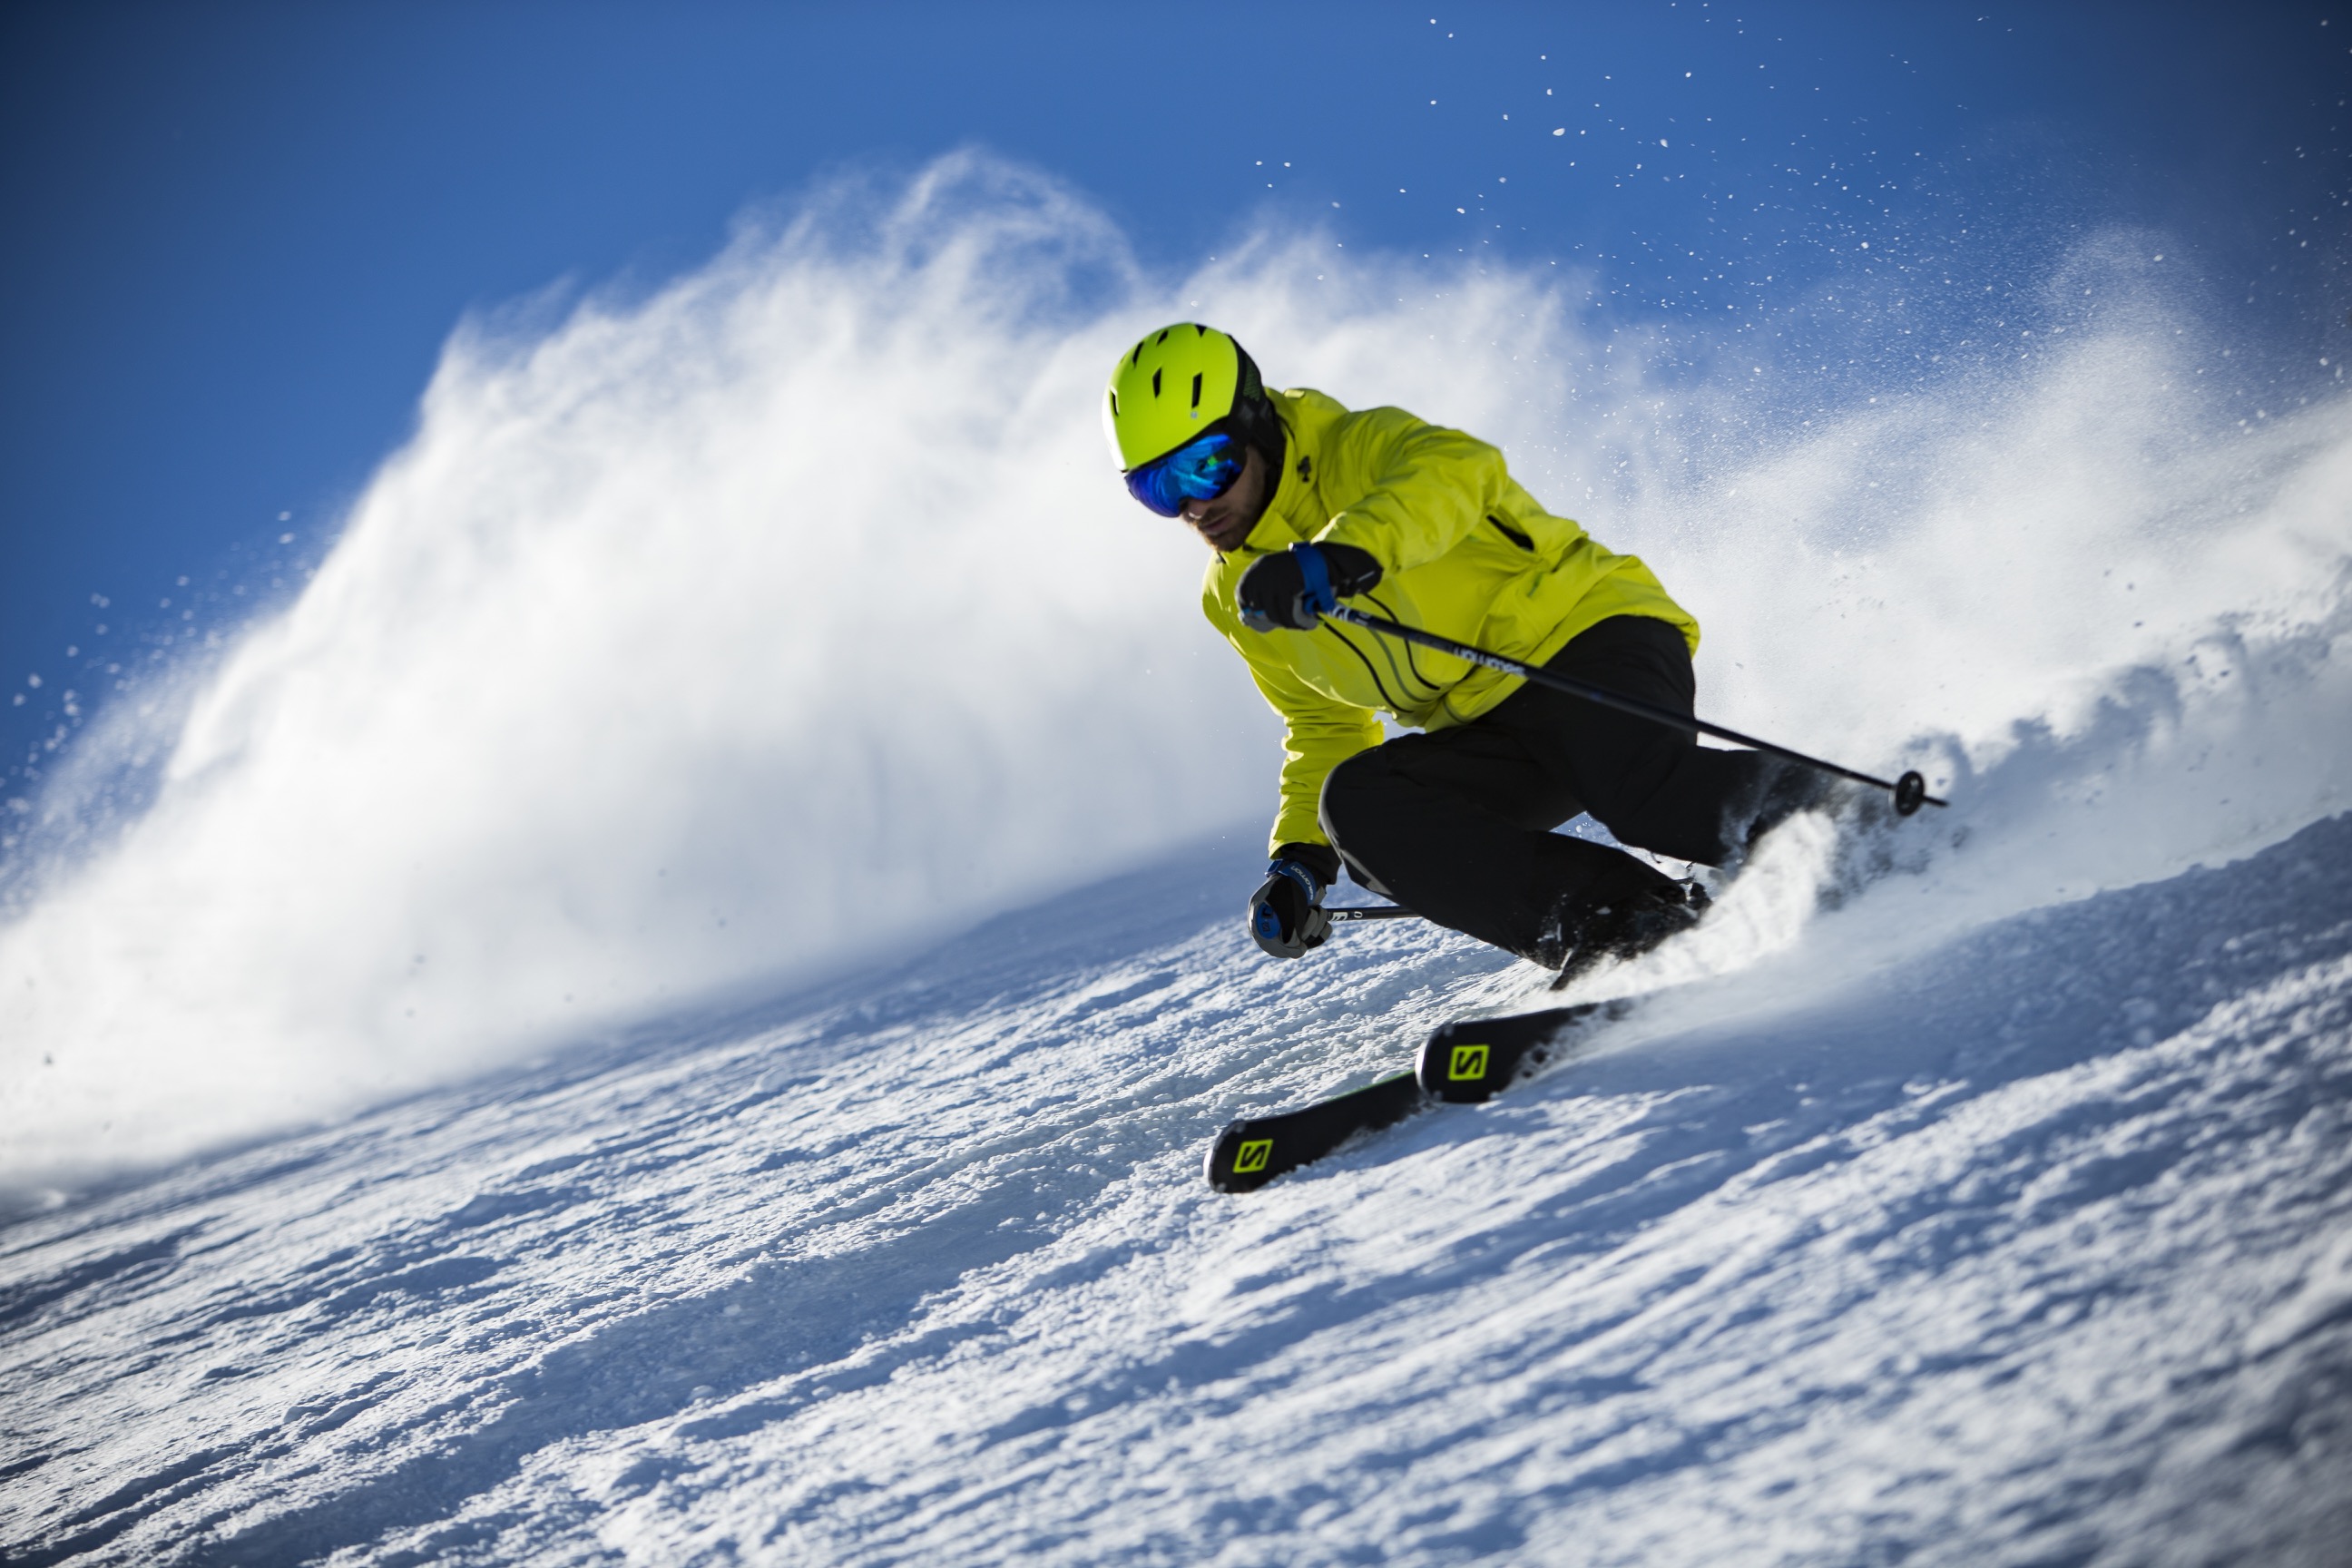 Klas tijdelijk Roestig Sensation of Skiing Like a Pro: New Salomon Skis Offer “Brute Edge Grip”